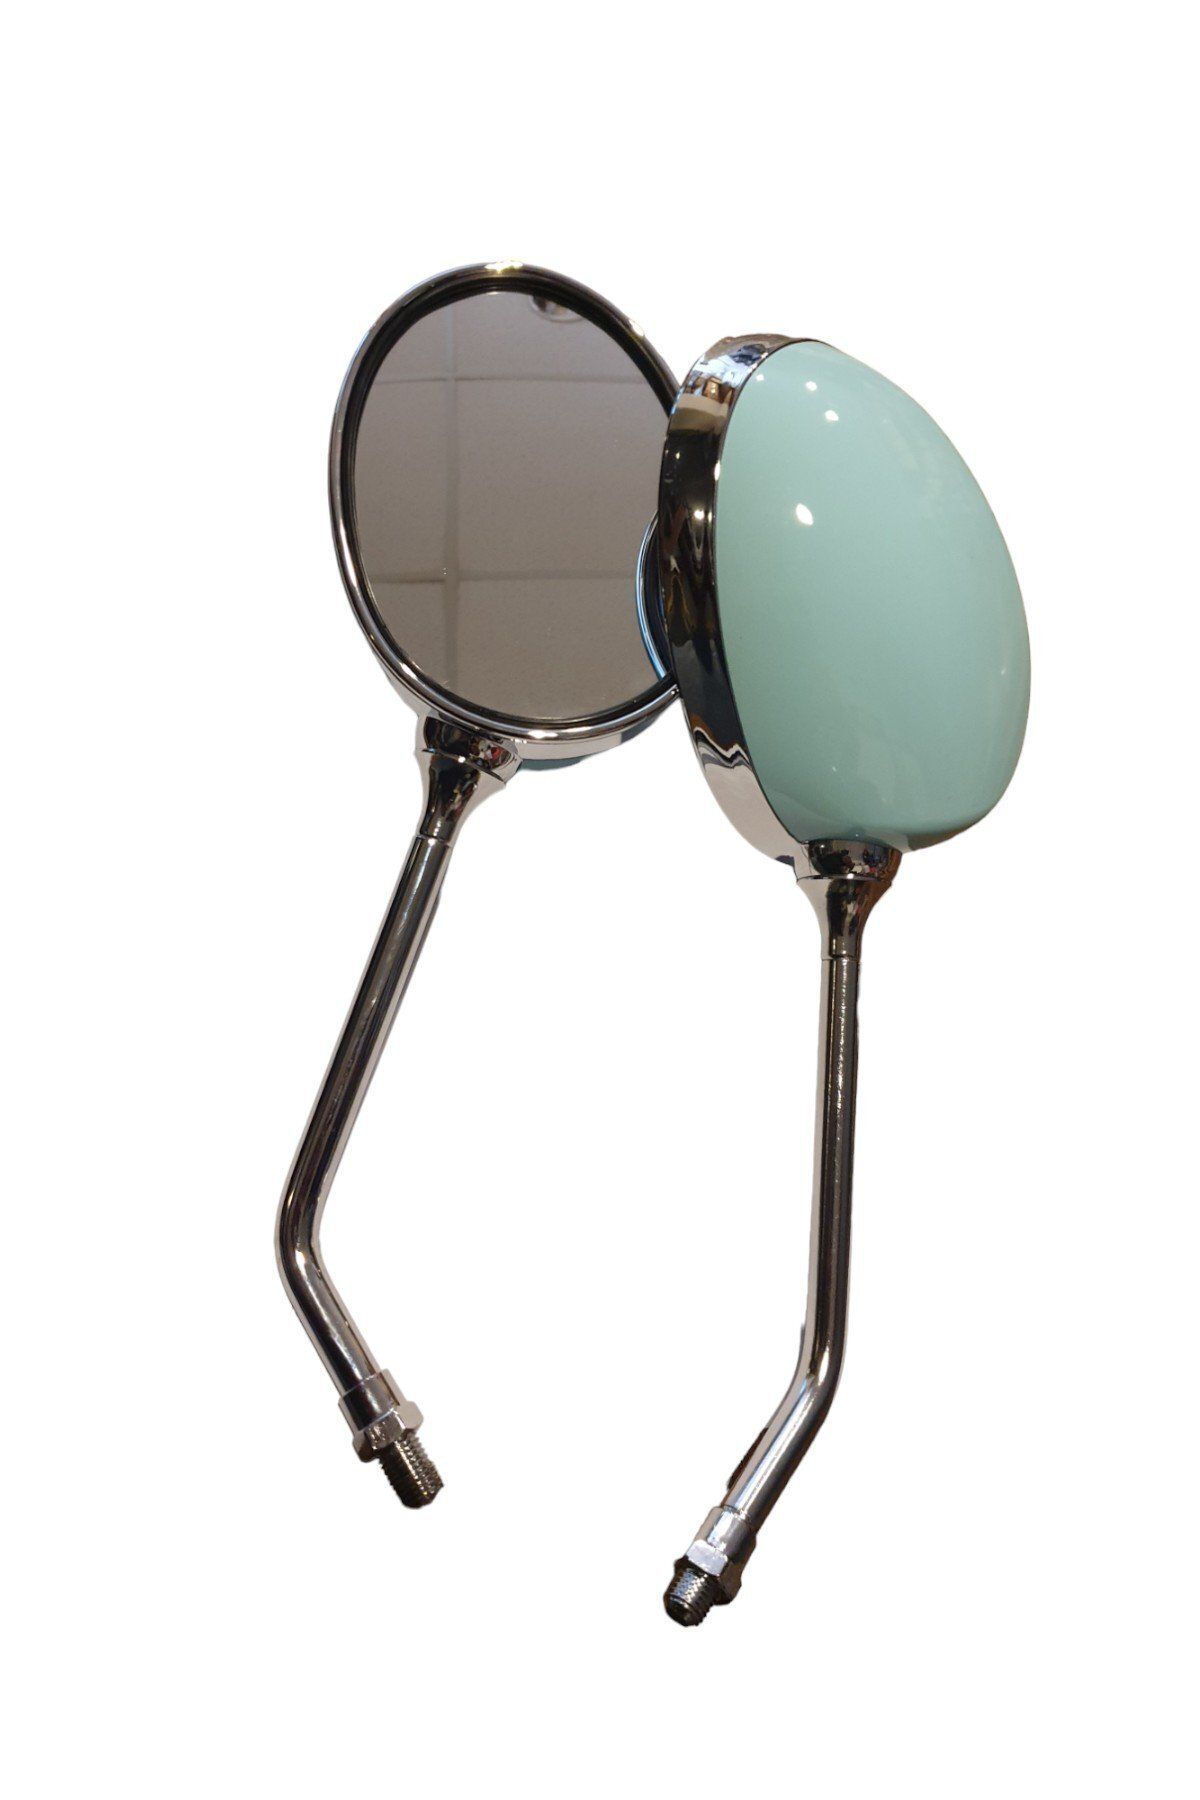 Arora Cappucino Ayna Takımı Turkuaz Renk Oem (YANLARI NİKELAJLI) Moto11